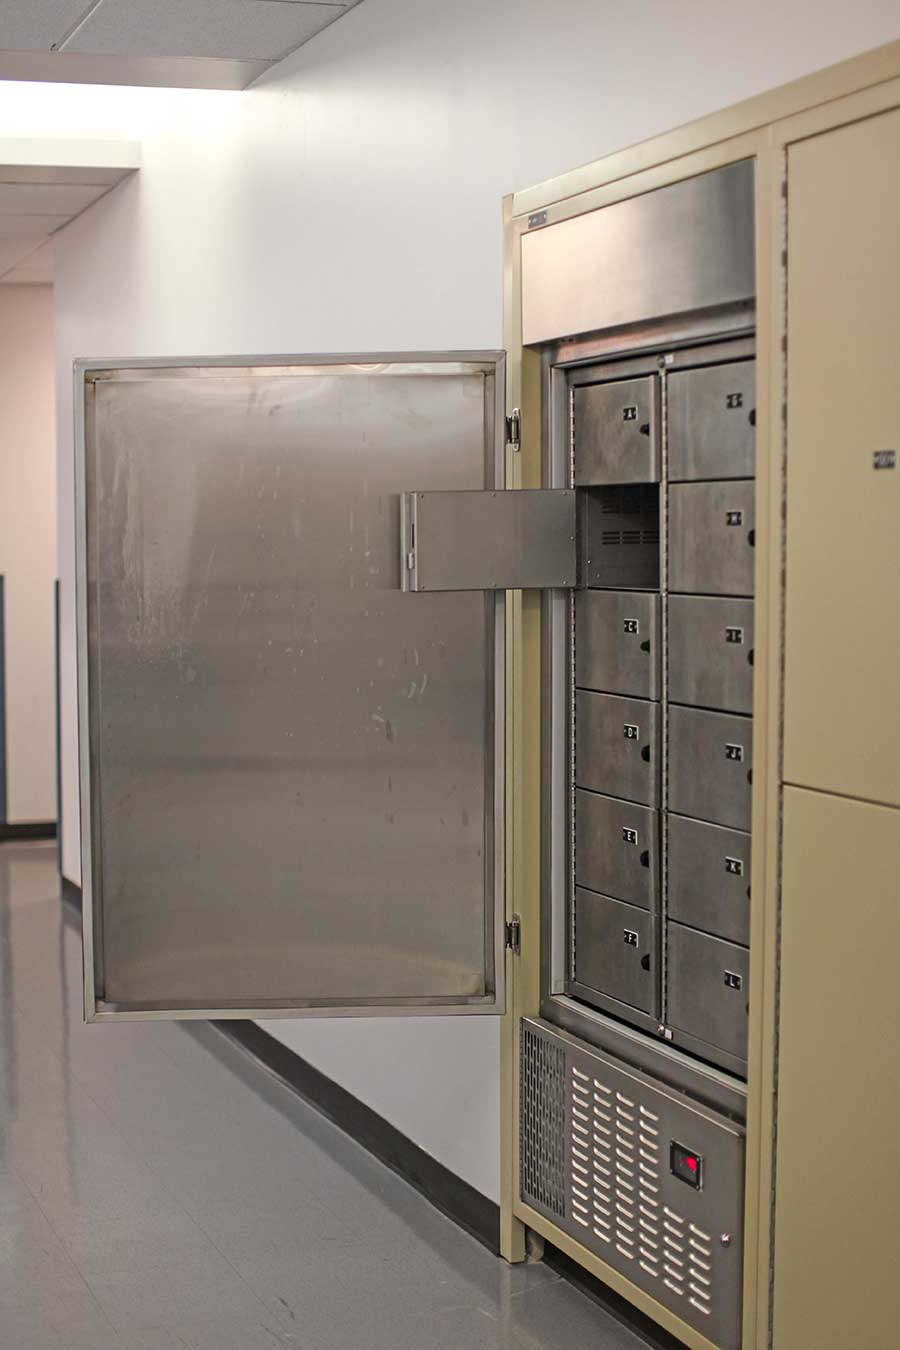 temporary evidence lockers